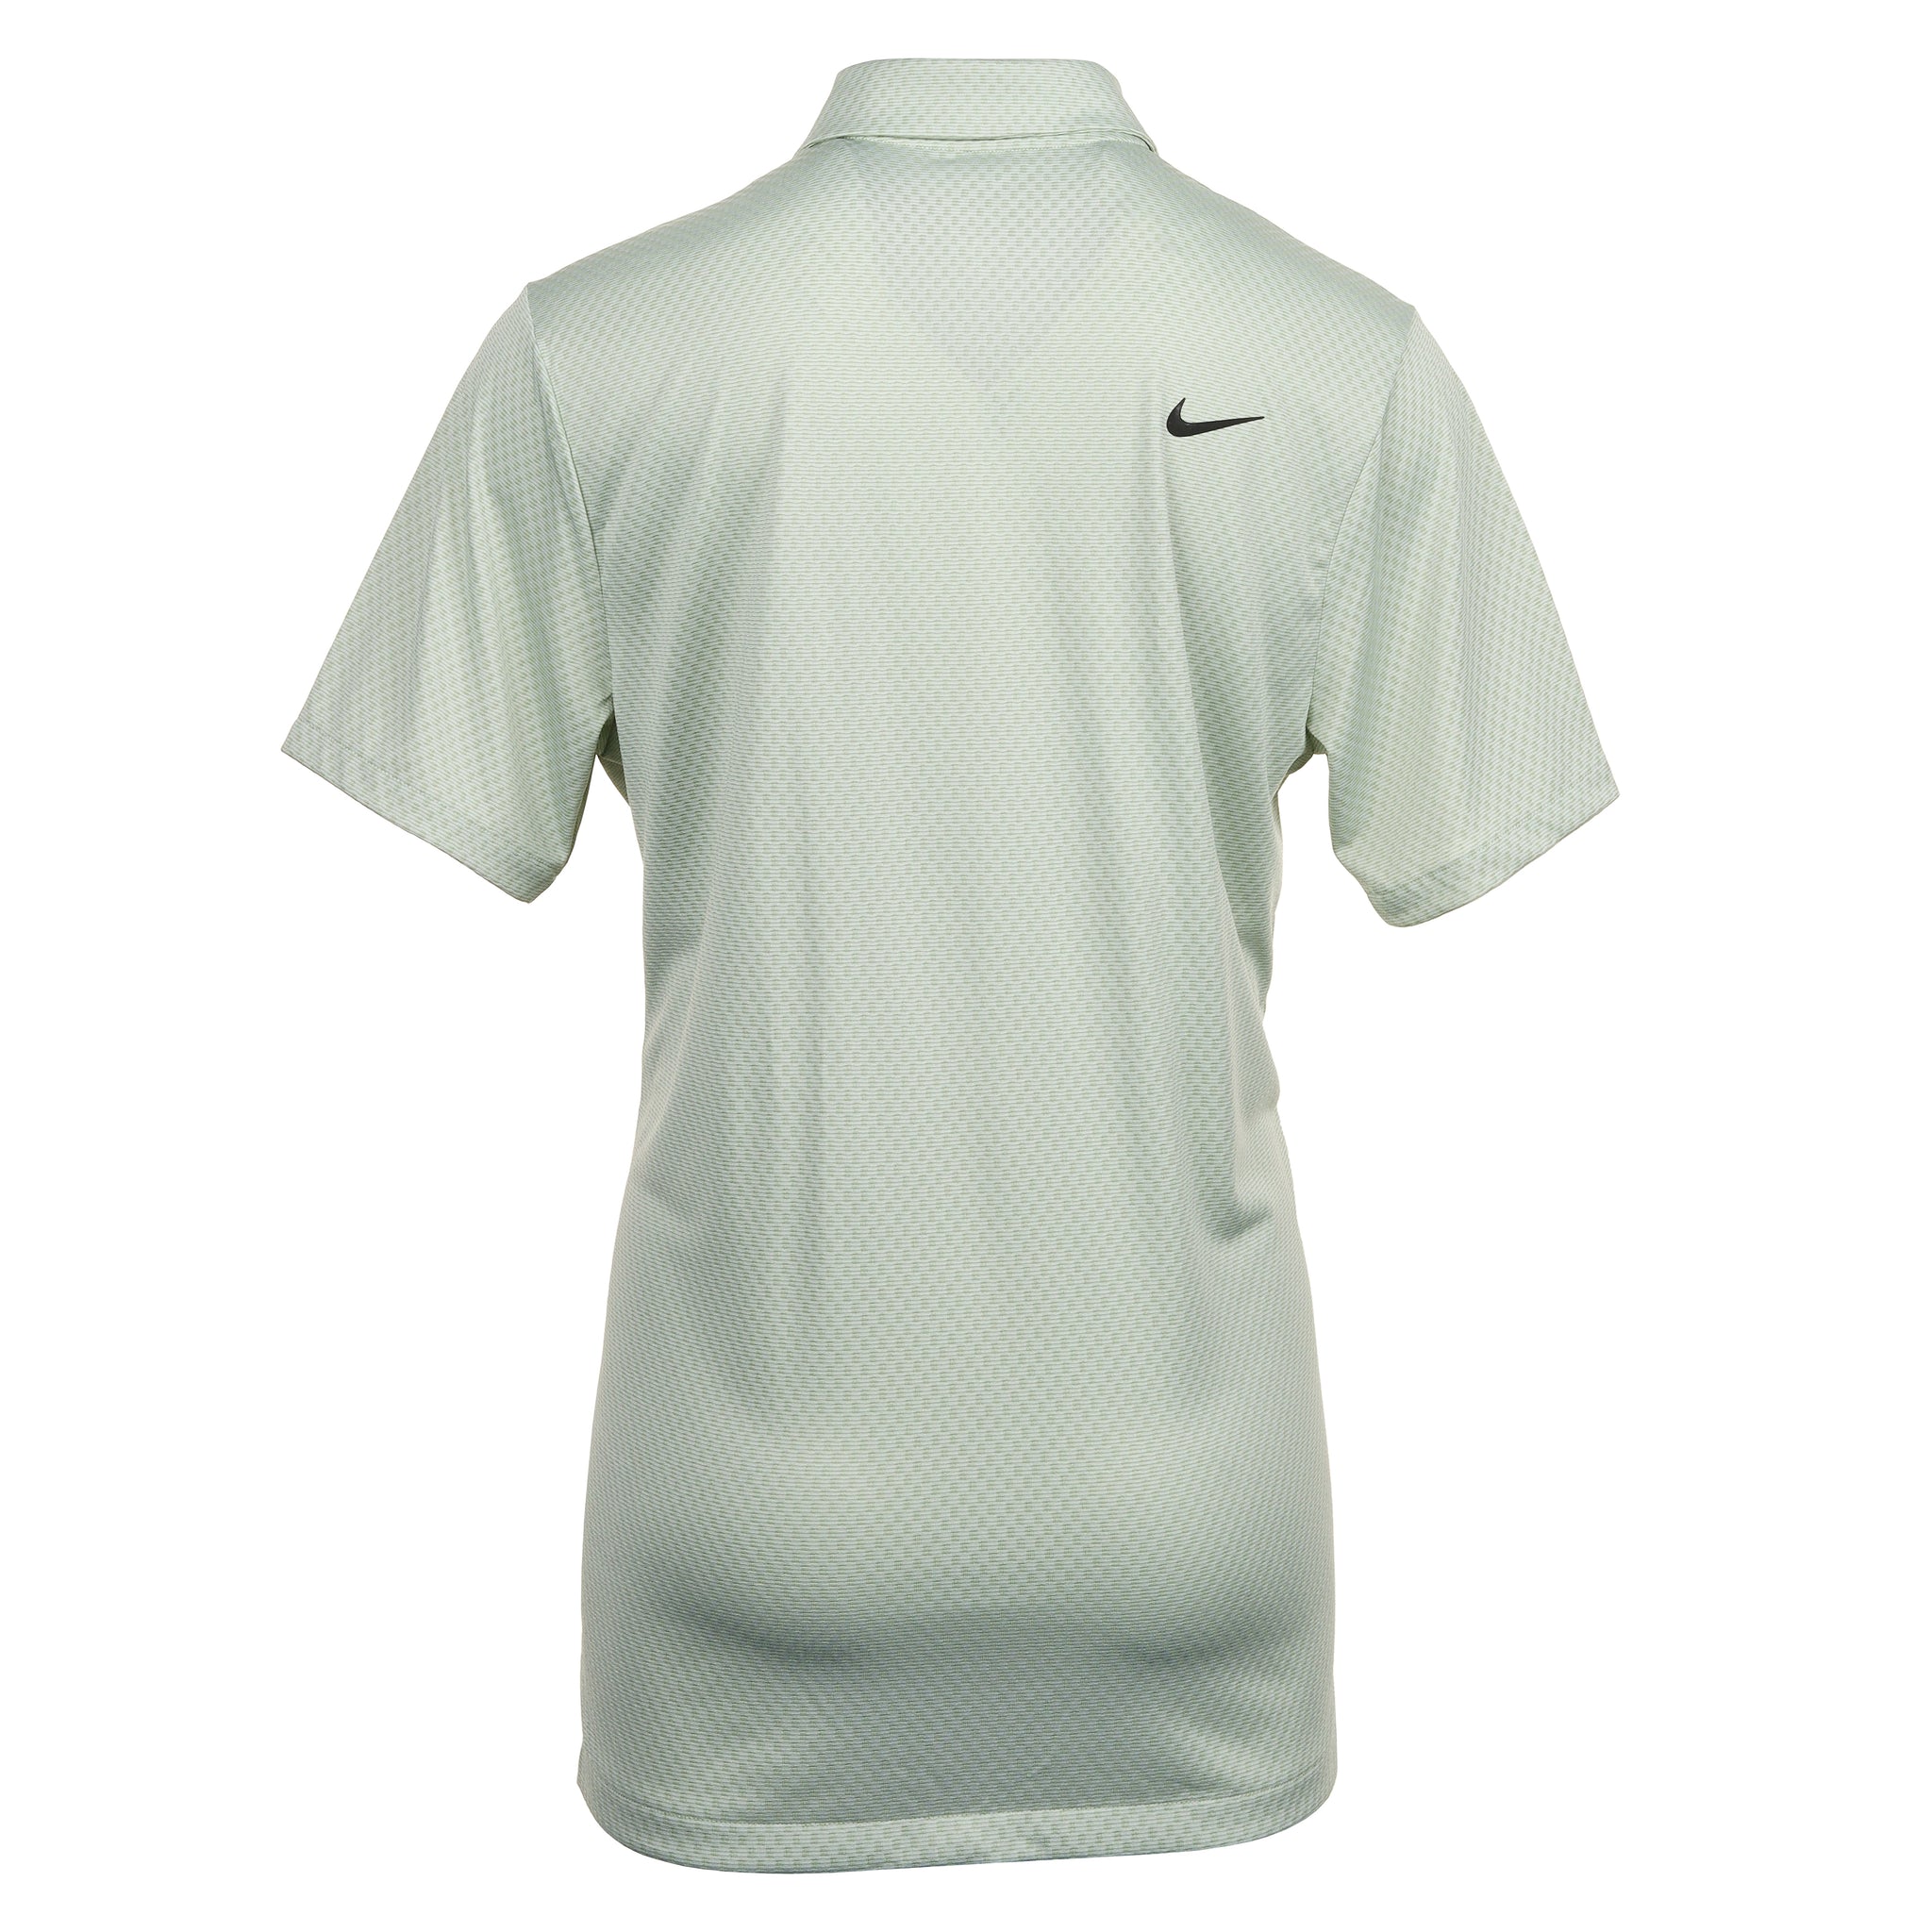 nike-golf-dri-fit-tour-jacquard-shirt-fd5741-343-honeydew-sea-glass